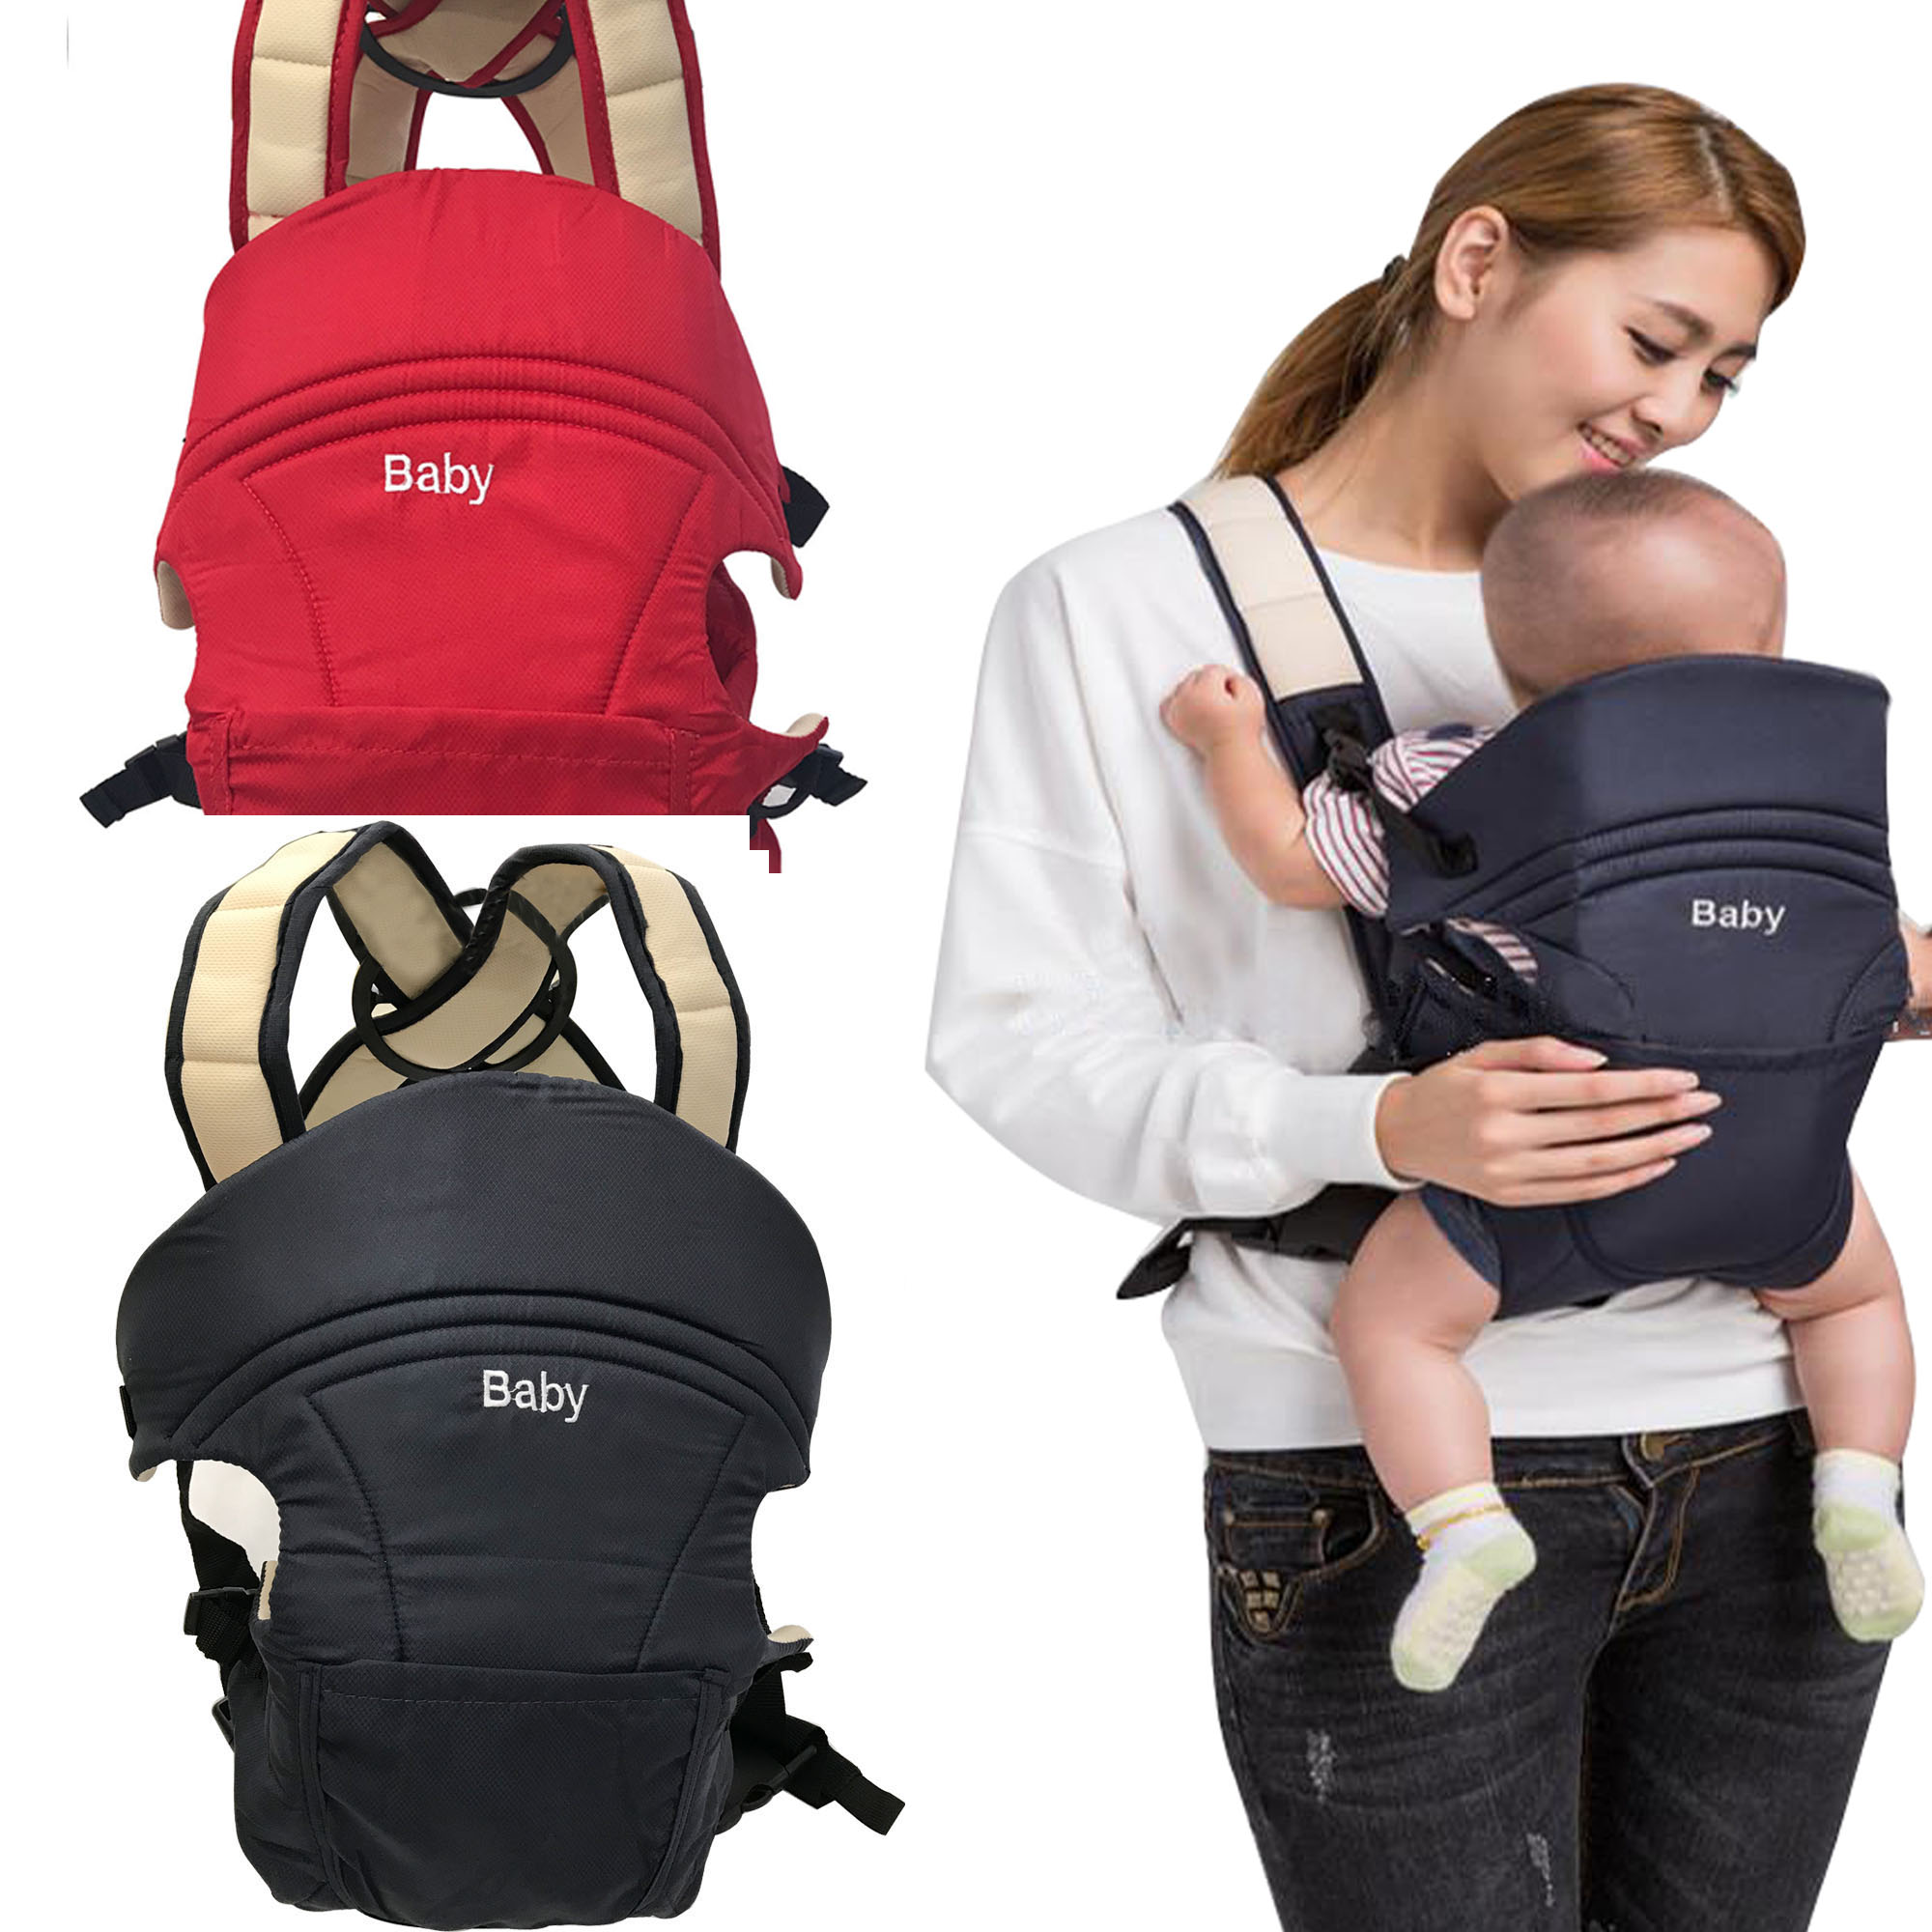 Spring Lady婴儿背带 多功能舒适透气背婴带婴儿背带腰凳婴儿用品图